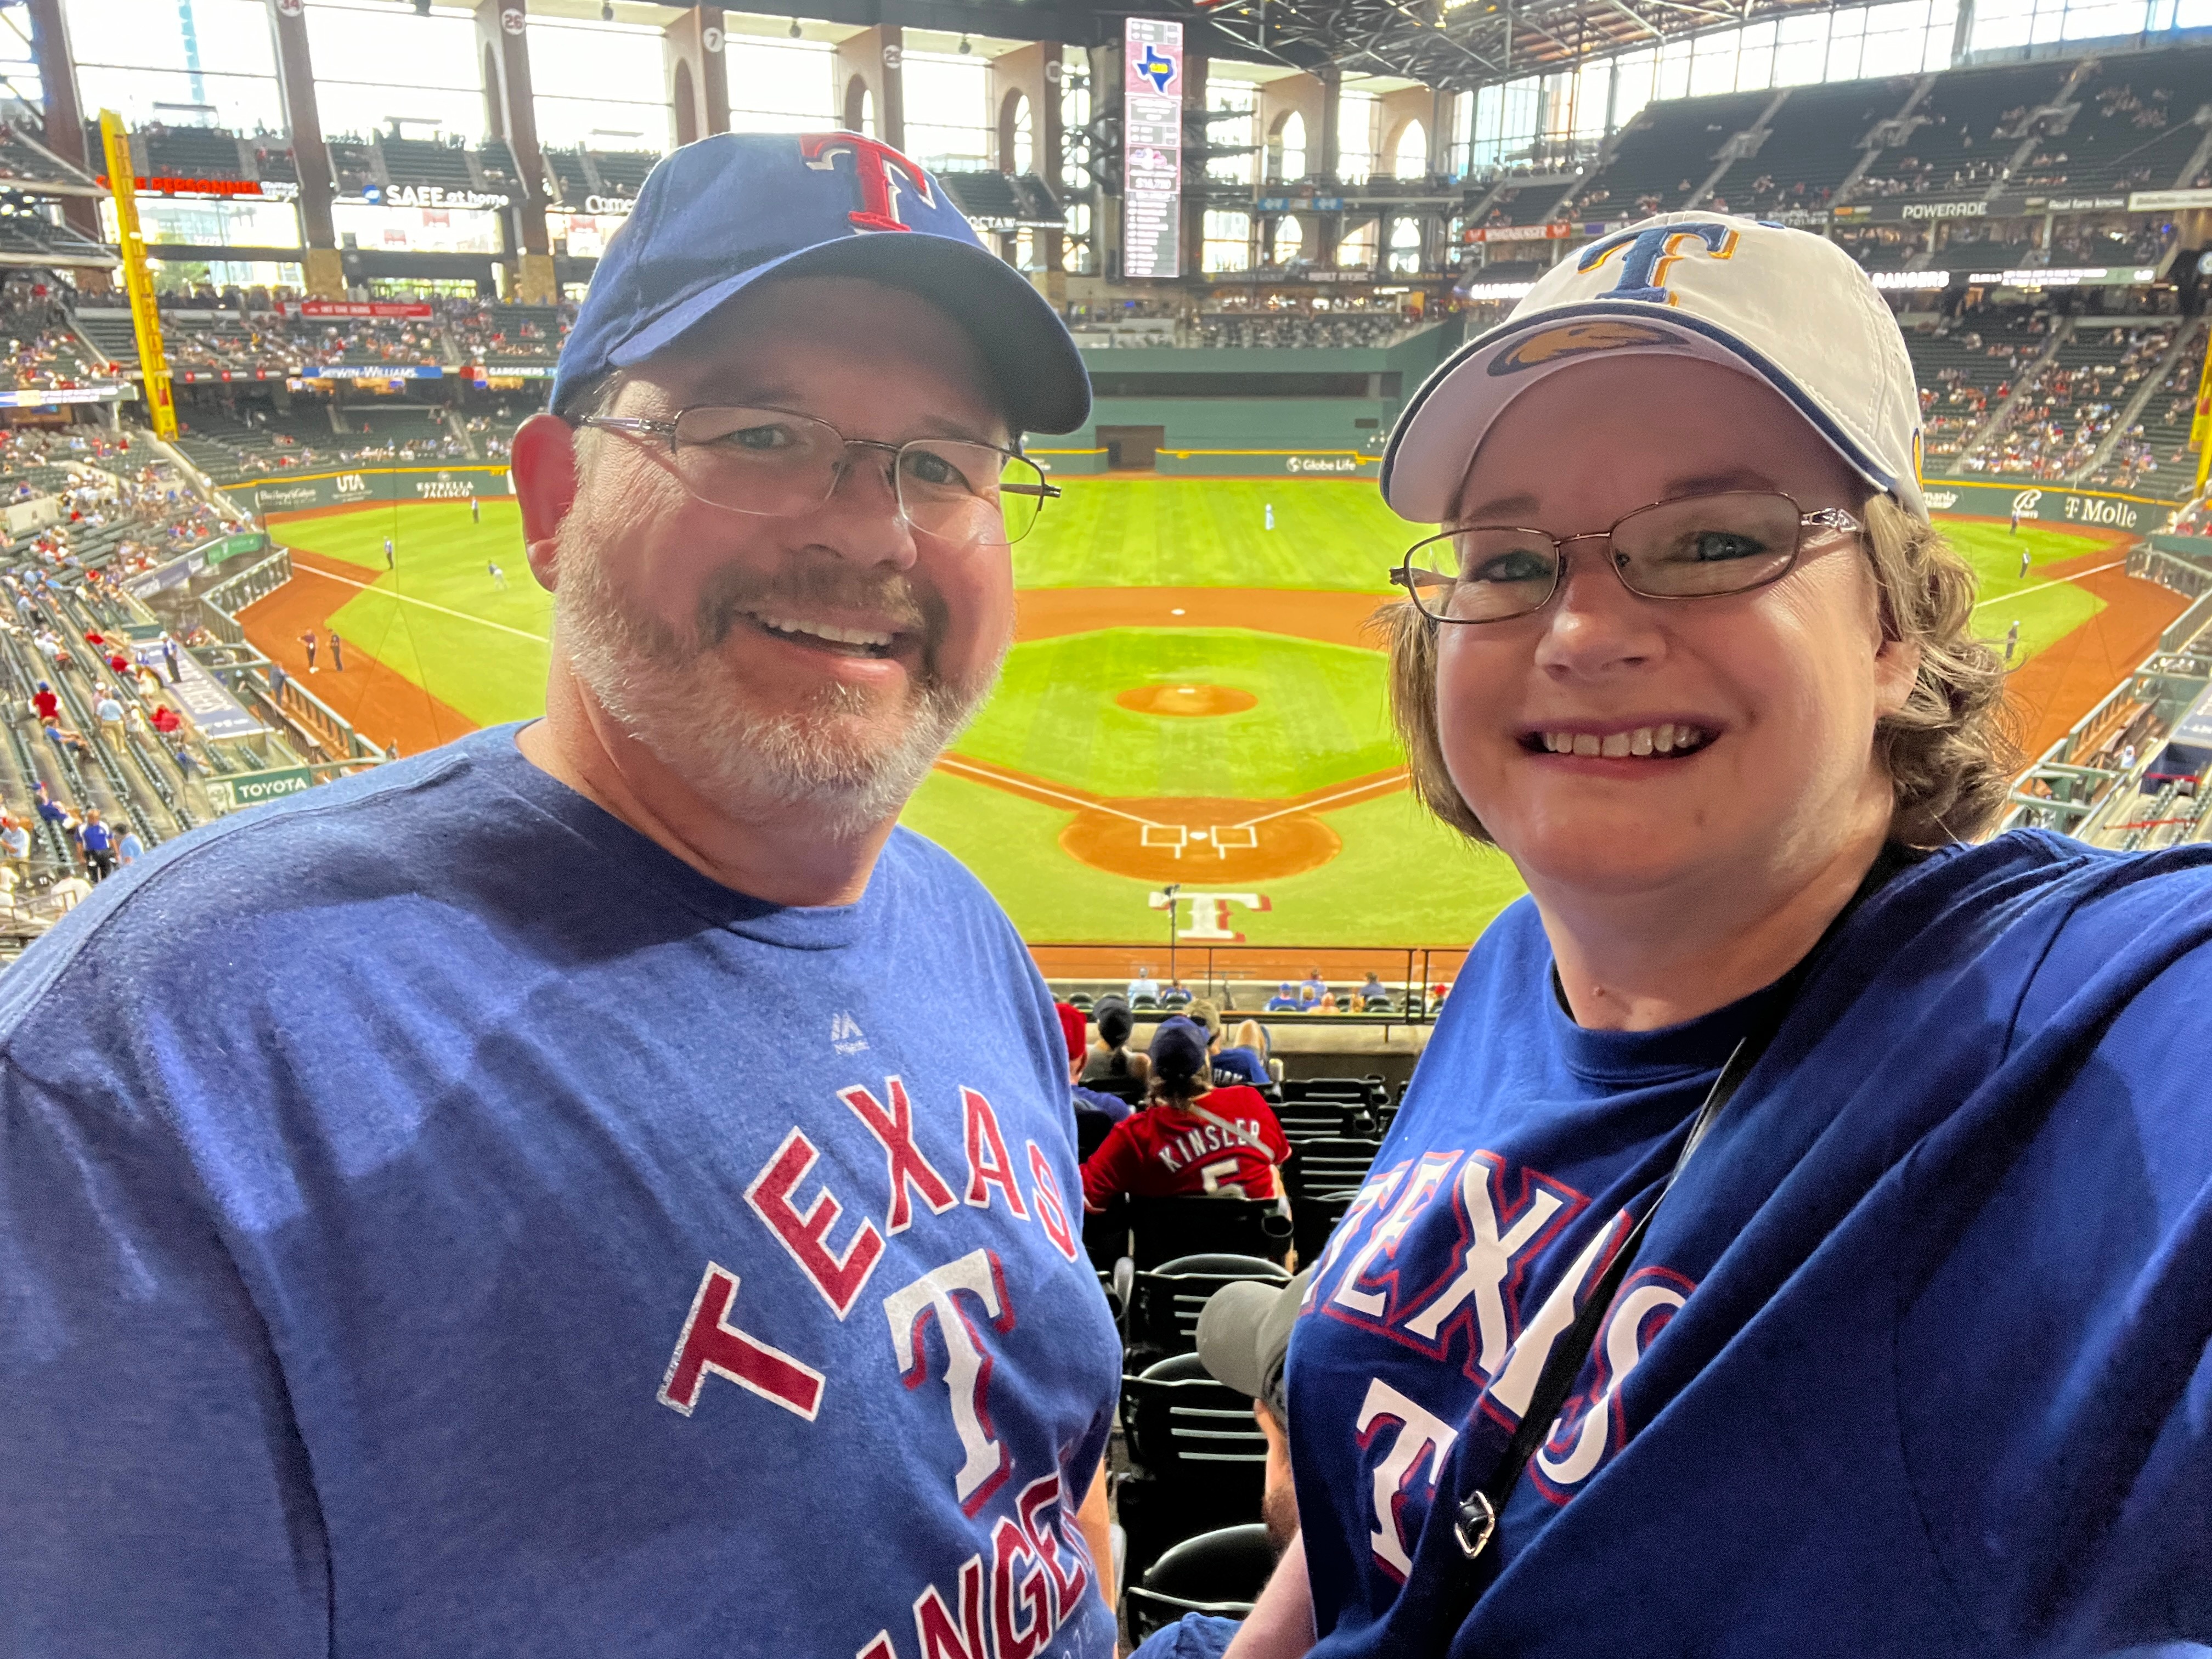 Texas Rangers *Kinsler* Baseball Majestic Shirt 56